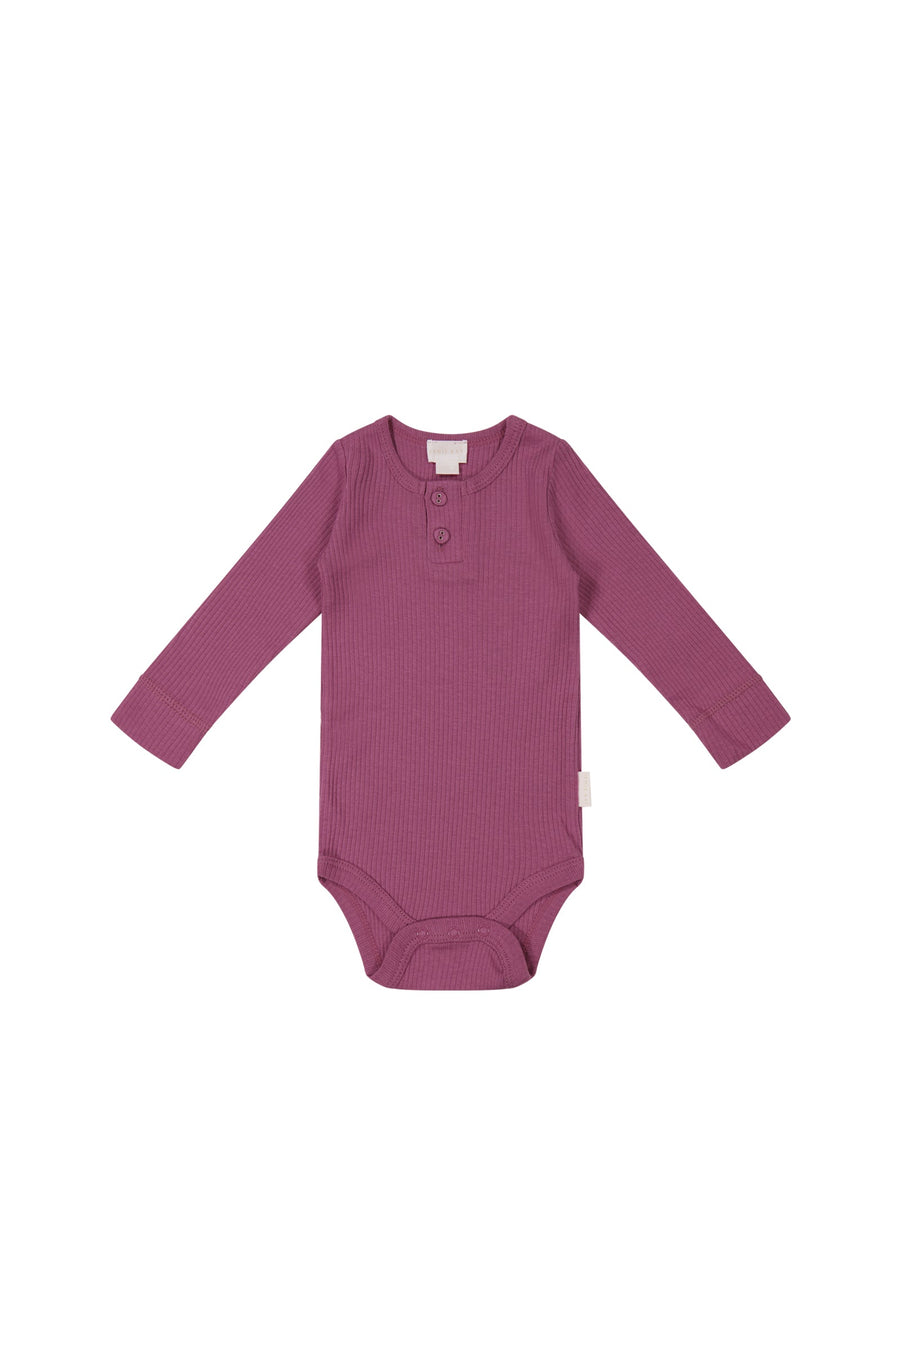 Organic Cotton Modal Long Sleeve Bodysuit - Cranberry Childrens Bodysuit from Jamie Kay USA